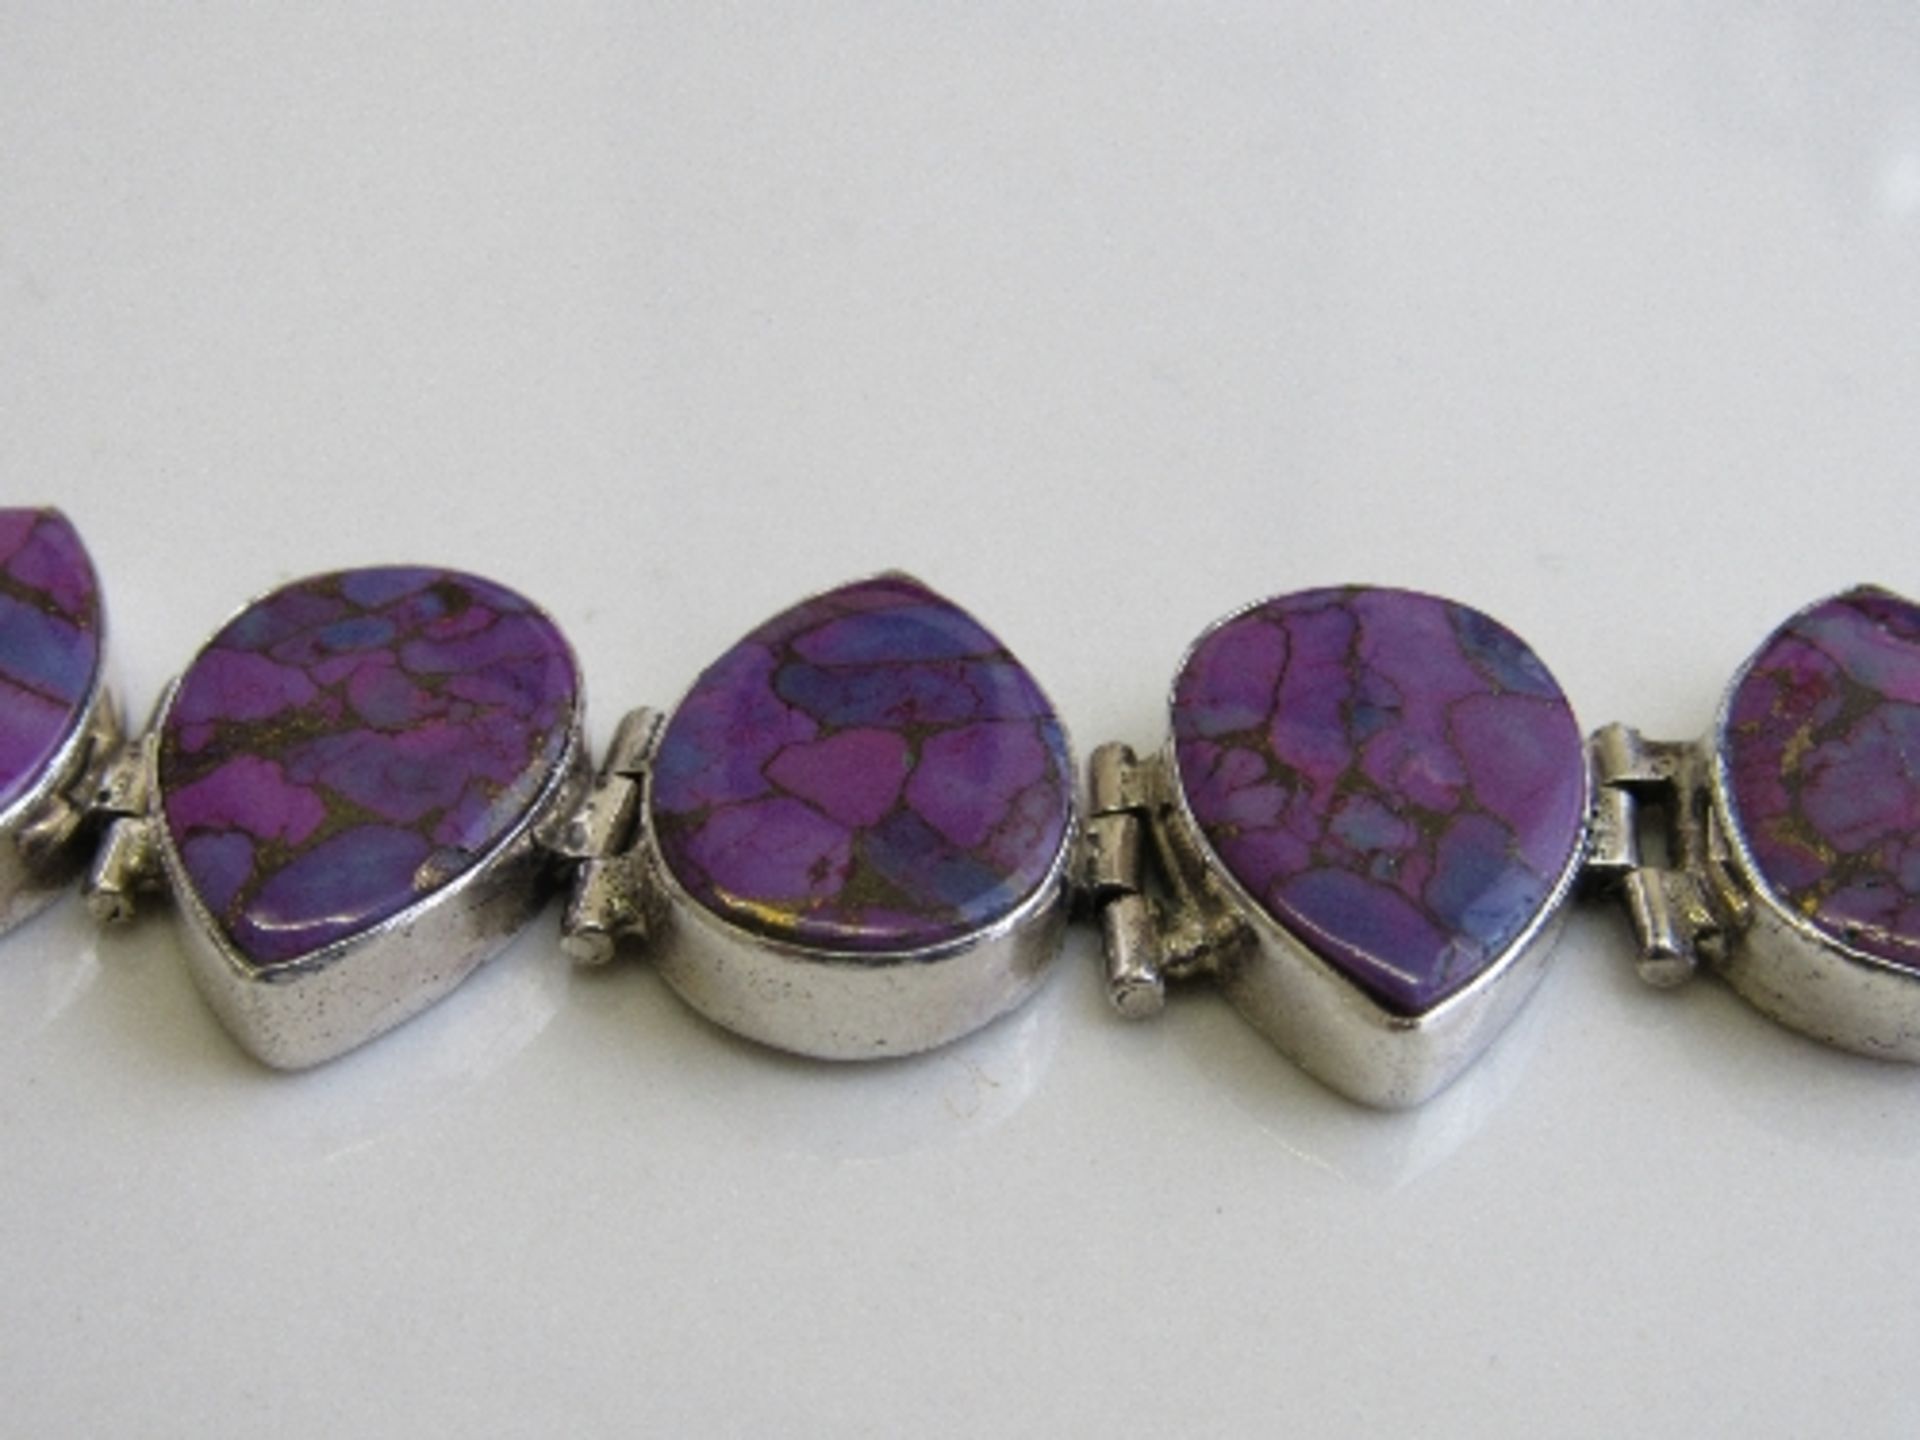 Silver hallmarked bracelet with tear drop purple stones. Estimate £20-30 - Image 2 of 3